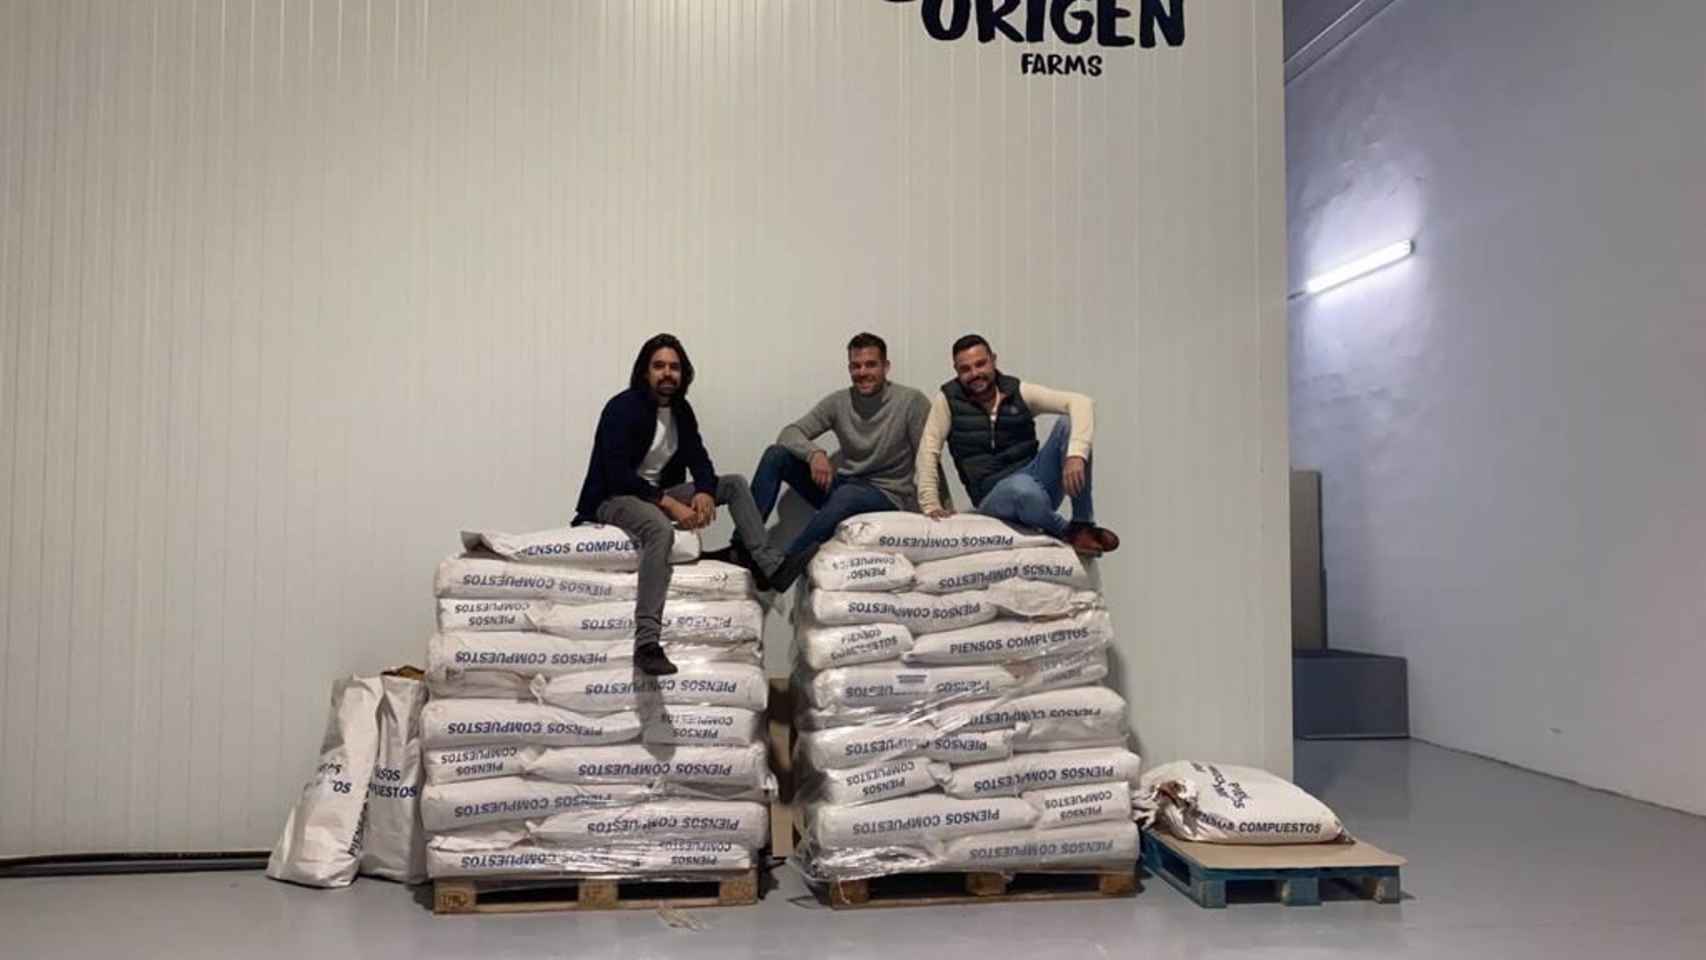 Los responsables de la empresa Origen Farms de La Roda.